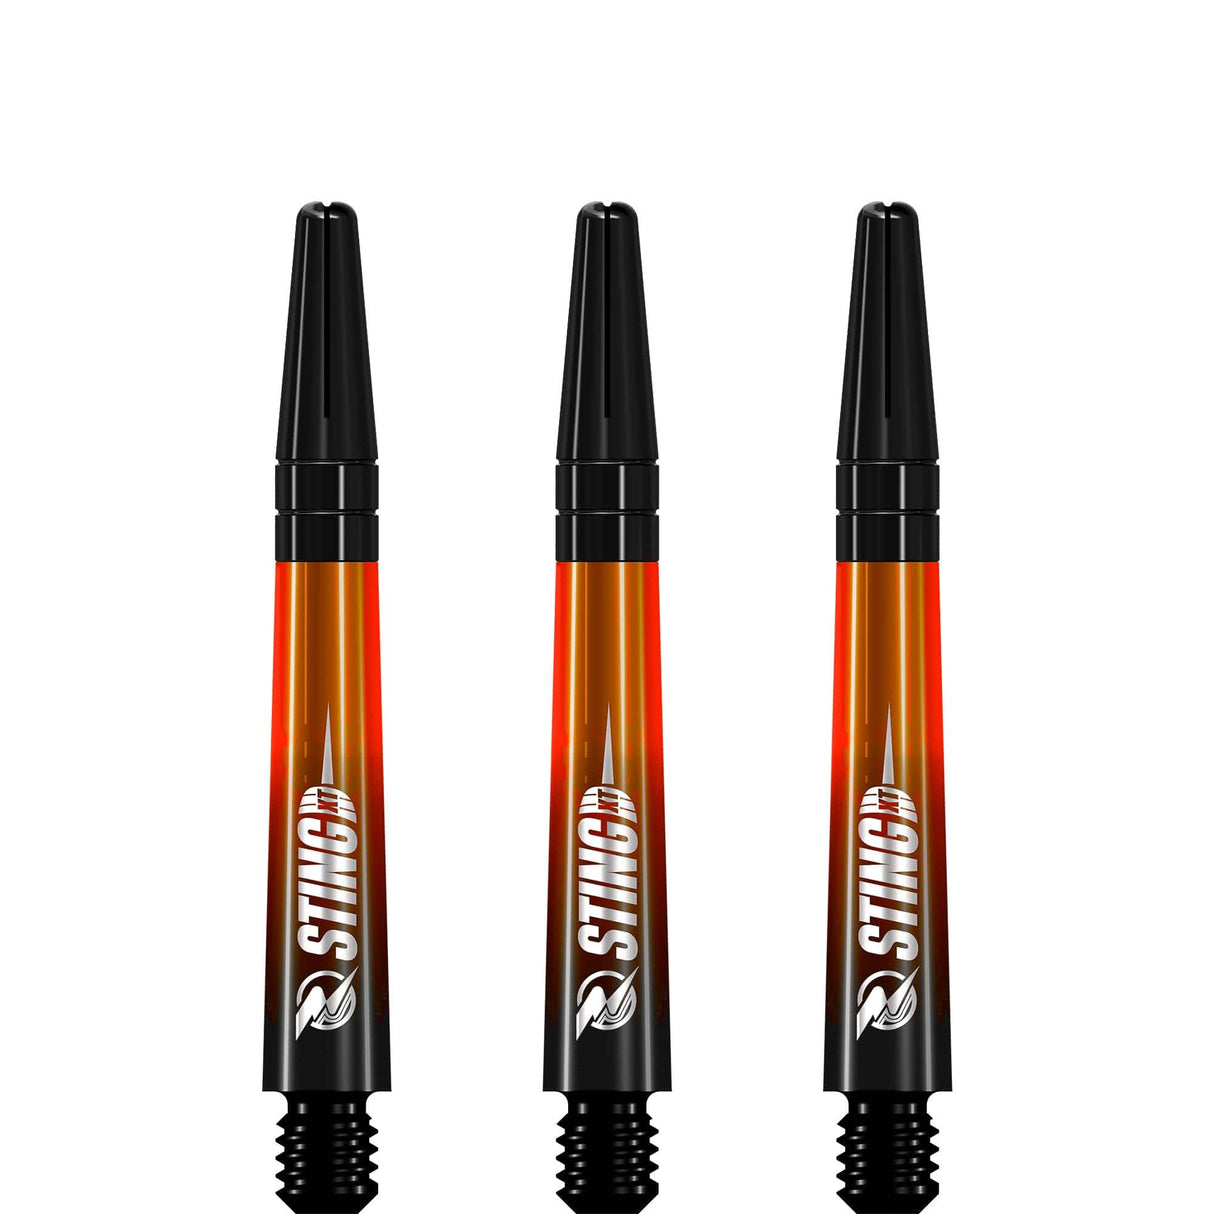 Ruthless Sting XT Dart Shafts - Polycarbonate - Gradient Black & Orange - Black Top Tweenie